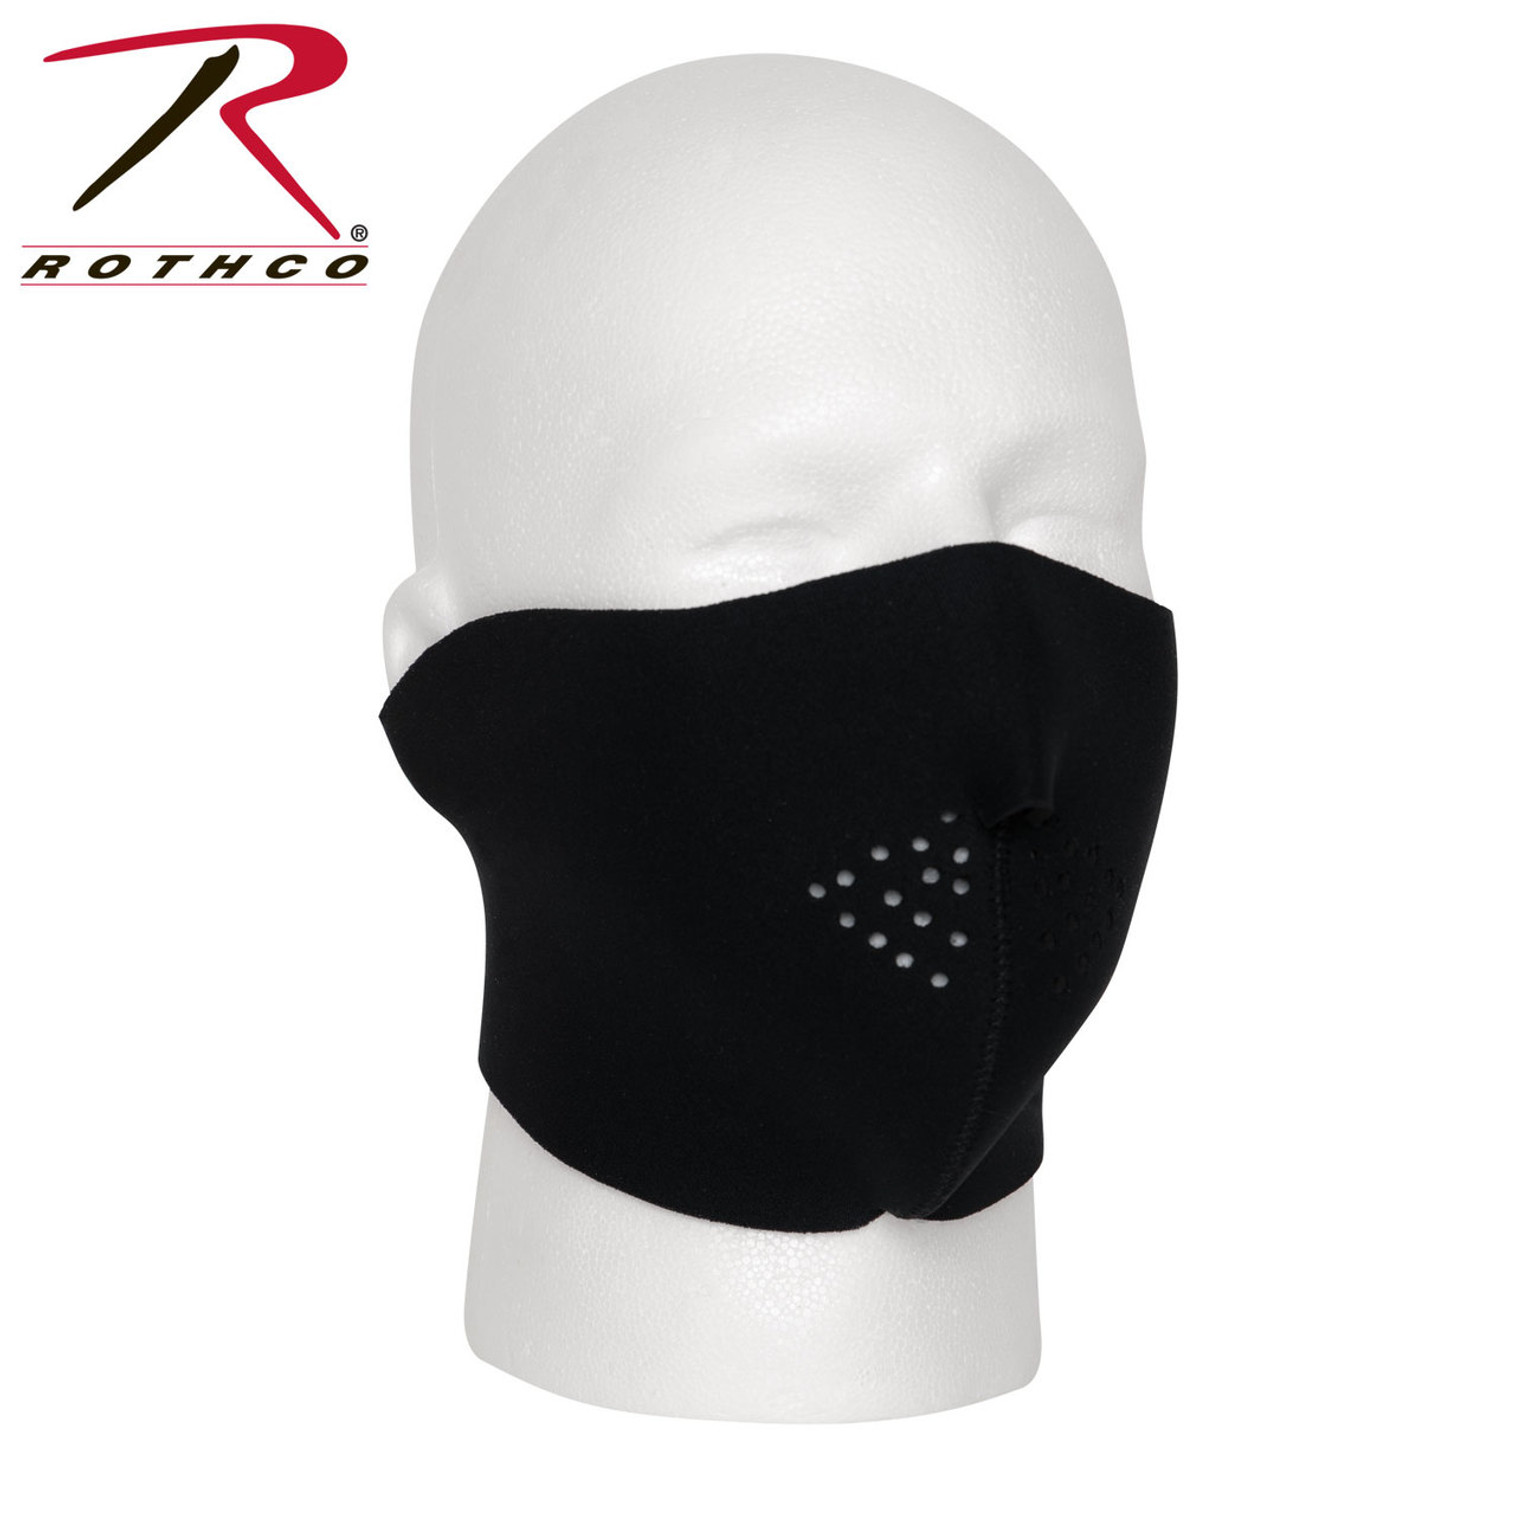 Rothco Neoprene Half Face Mask